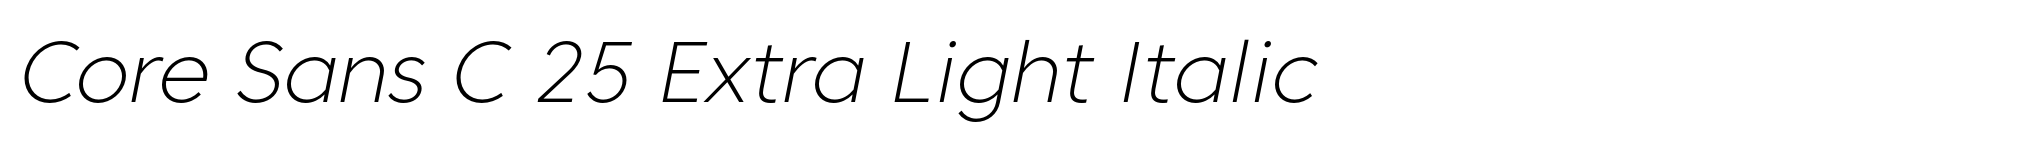 Core Sans C 25 Extra Light Italic image